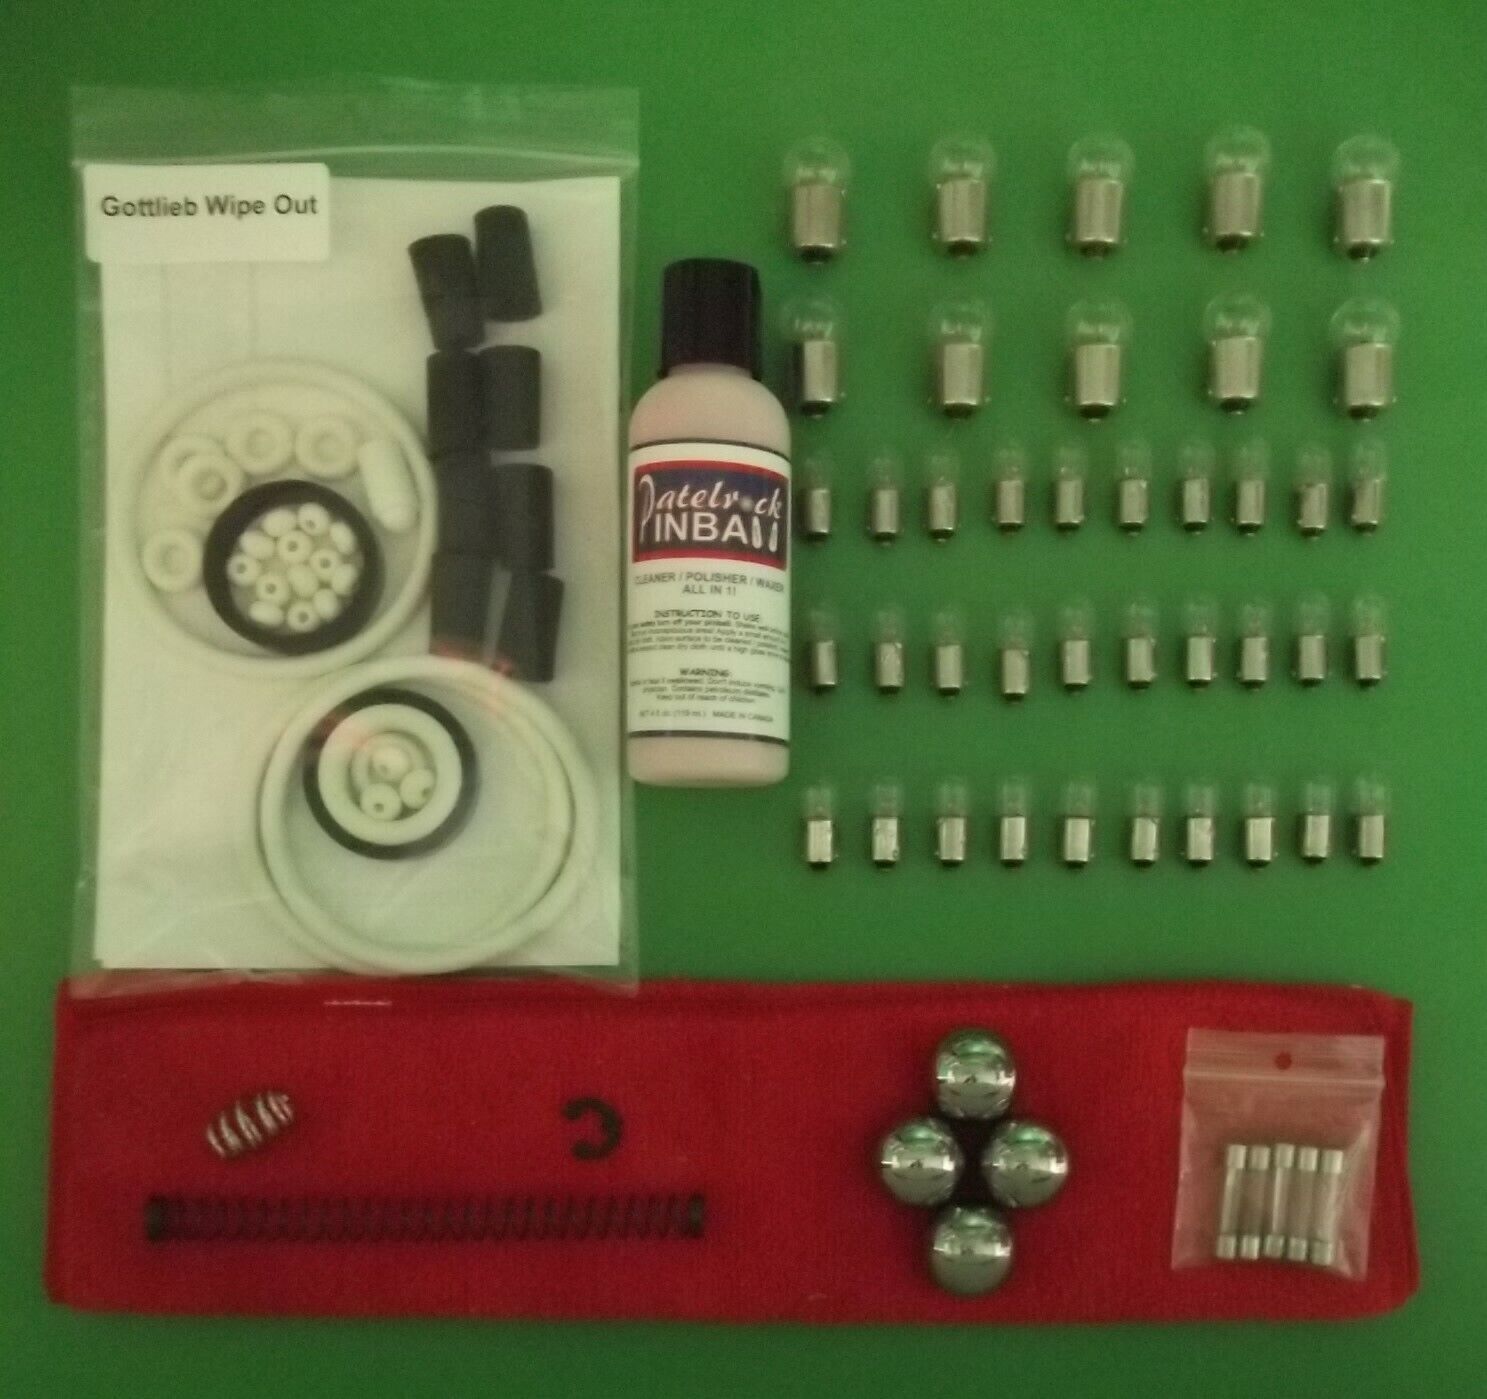 1993 Gottlieb / Premier Wipe Out Pinball Machine Maintenance Super Kit